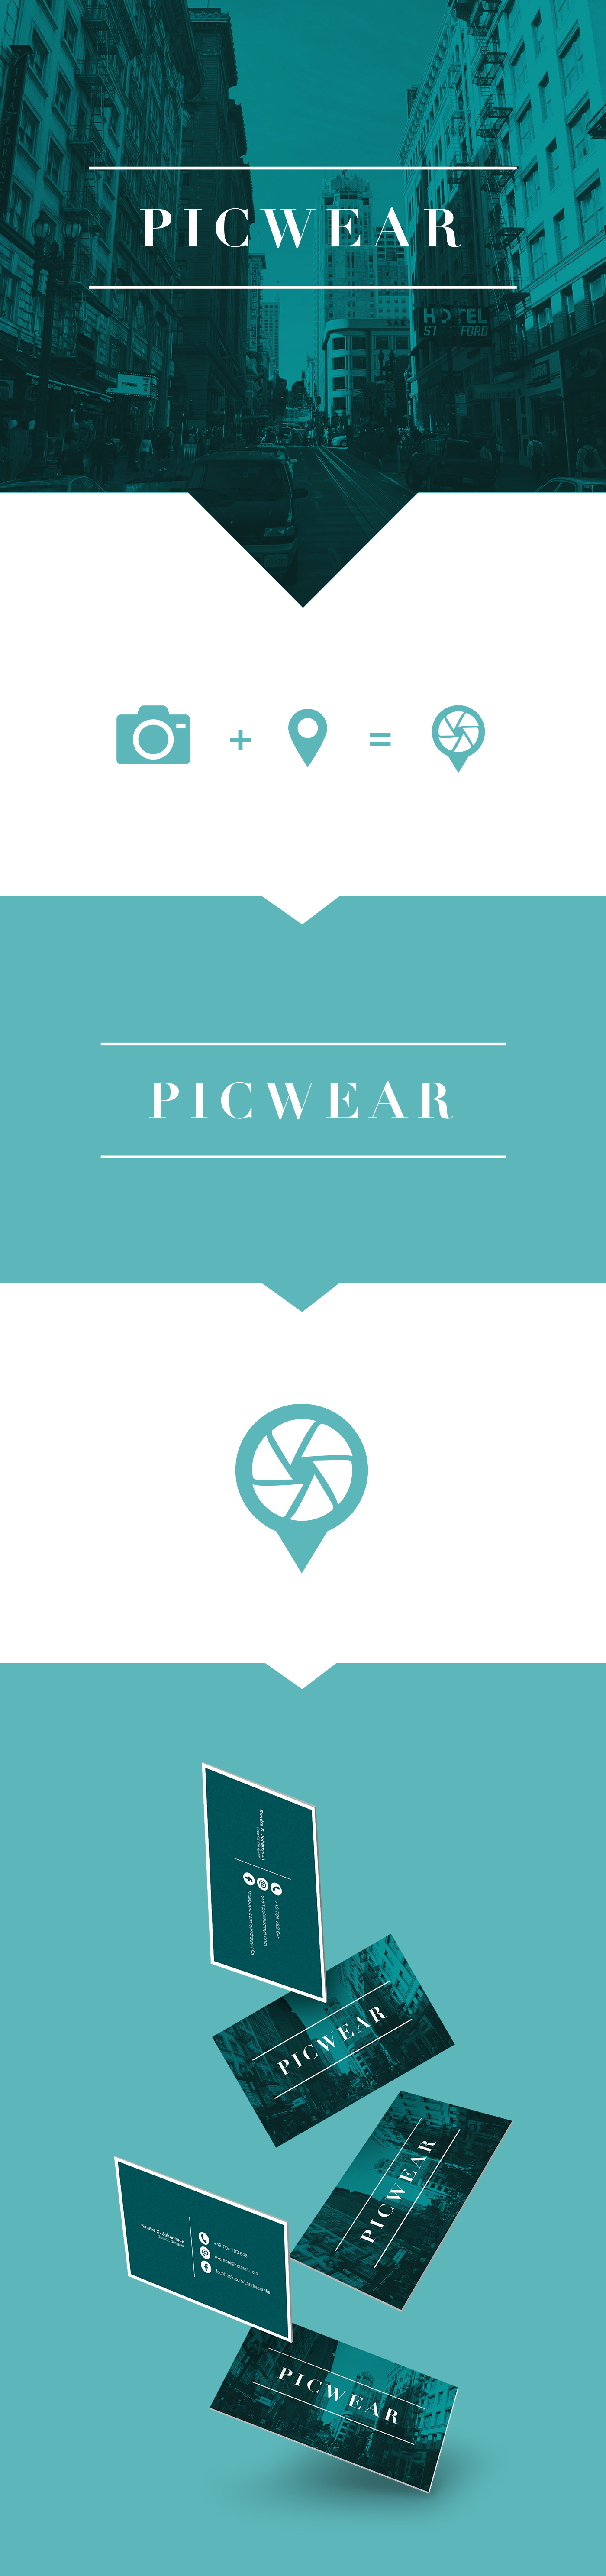 Picwear logo logodesign graphic design manual InDesign poster broshure folder logos